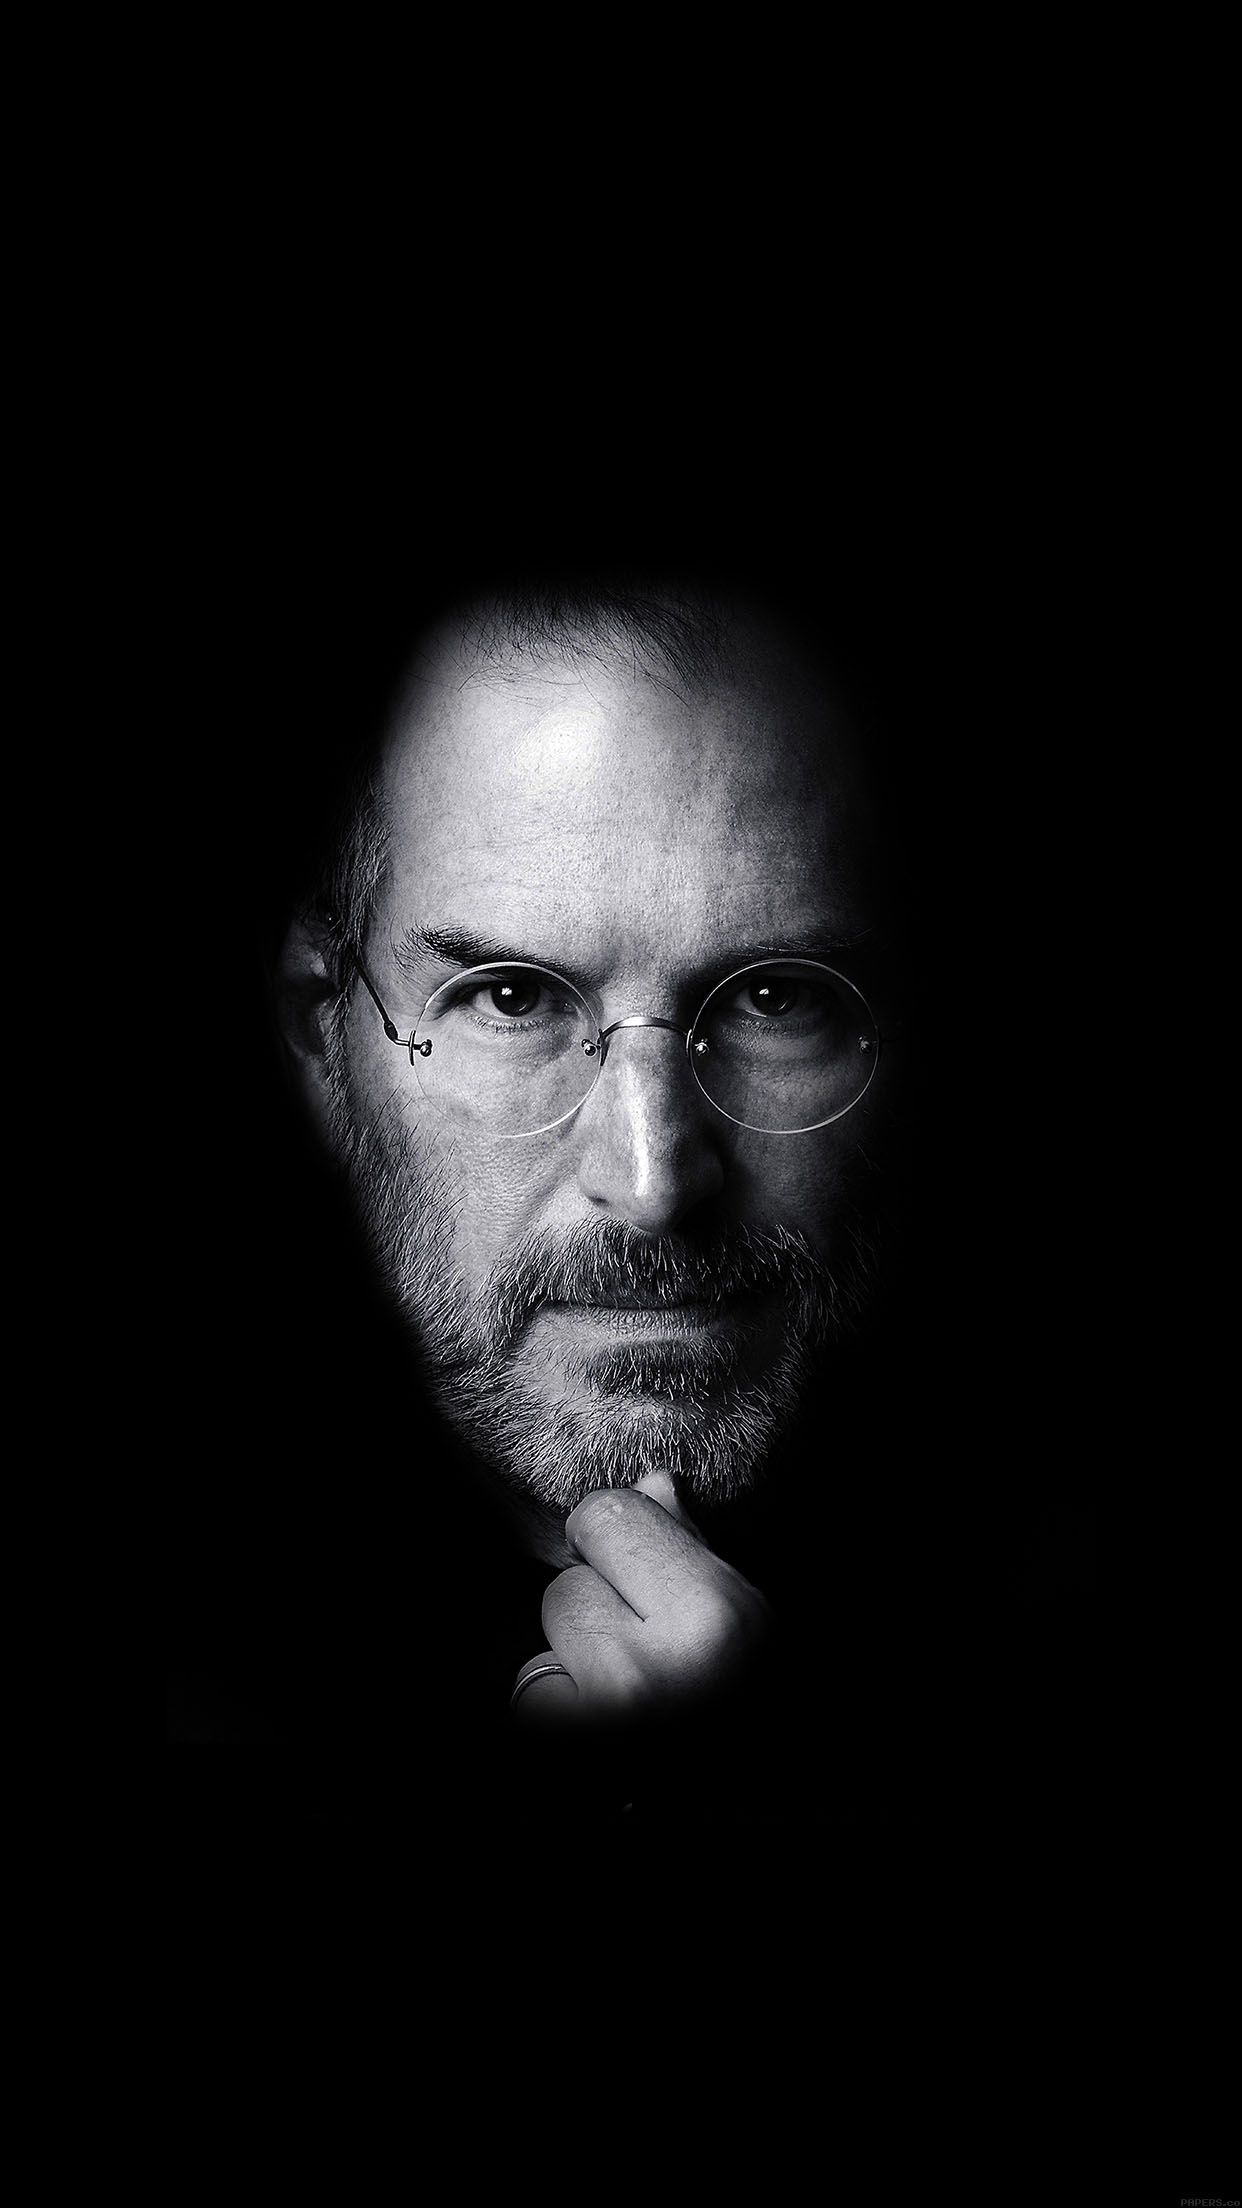 Wallpaper Steve Jobs Face Apple iPhone6 Plus Jpg